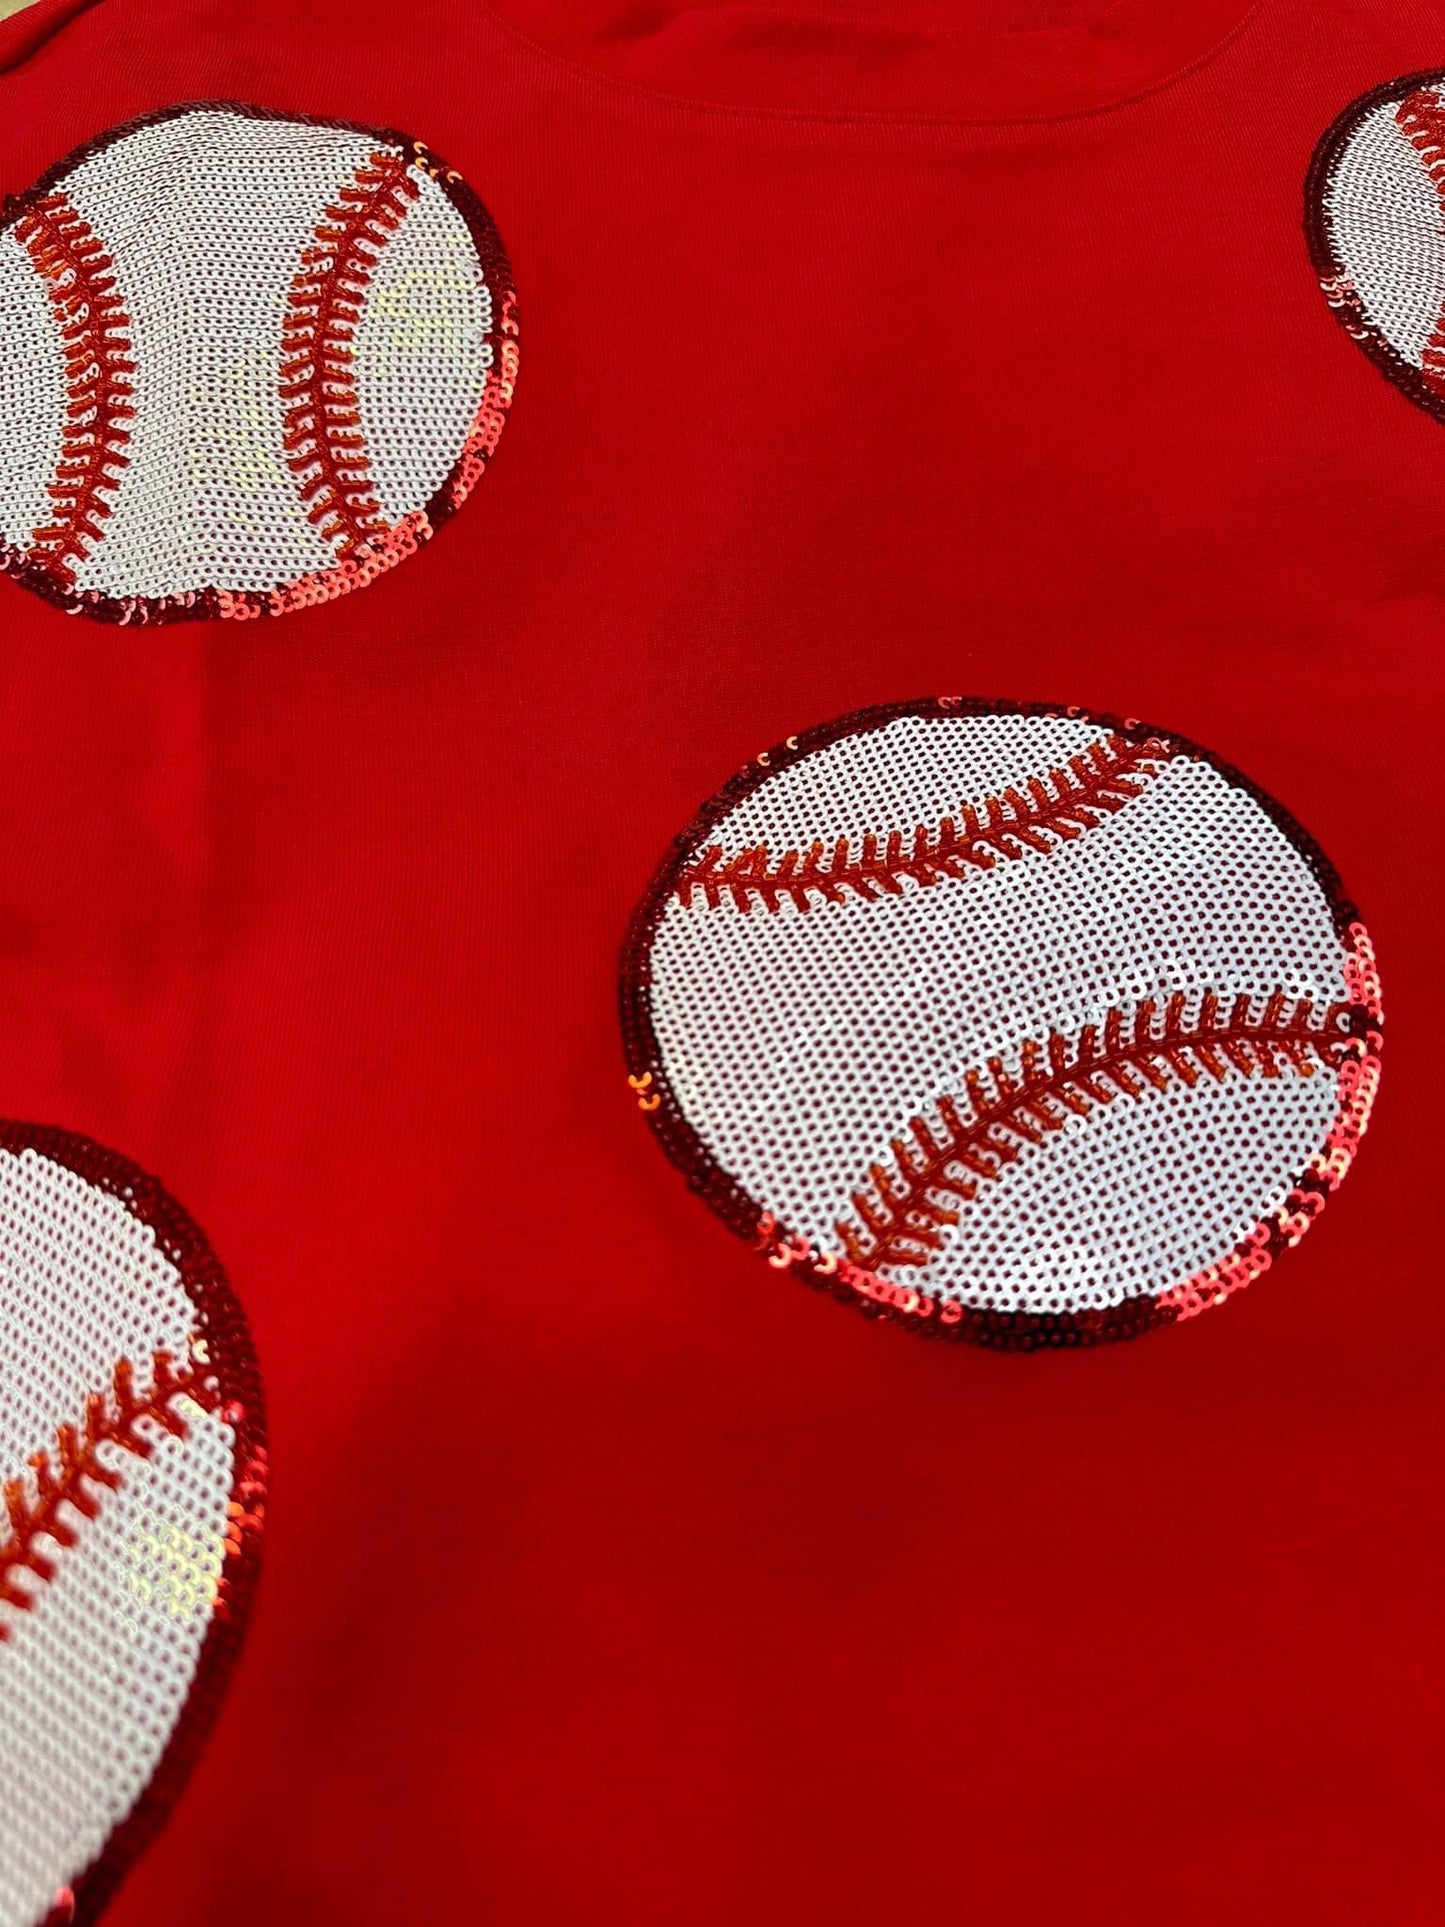 Baseball Beadtubes Sequins Red Tshirt